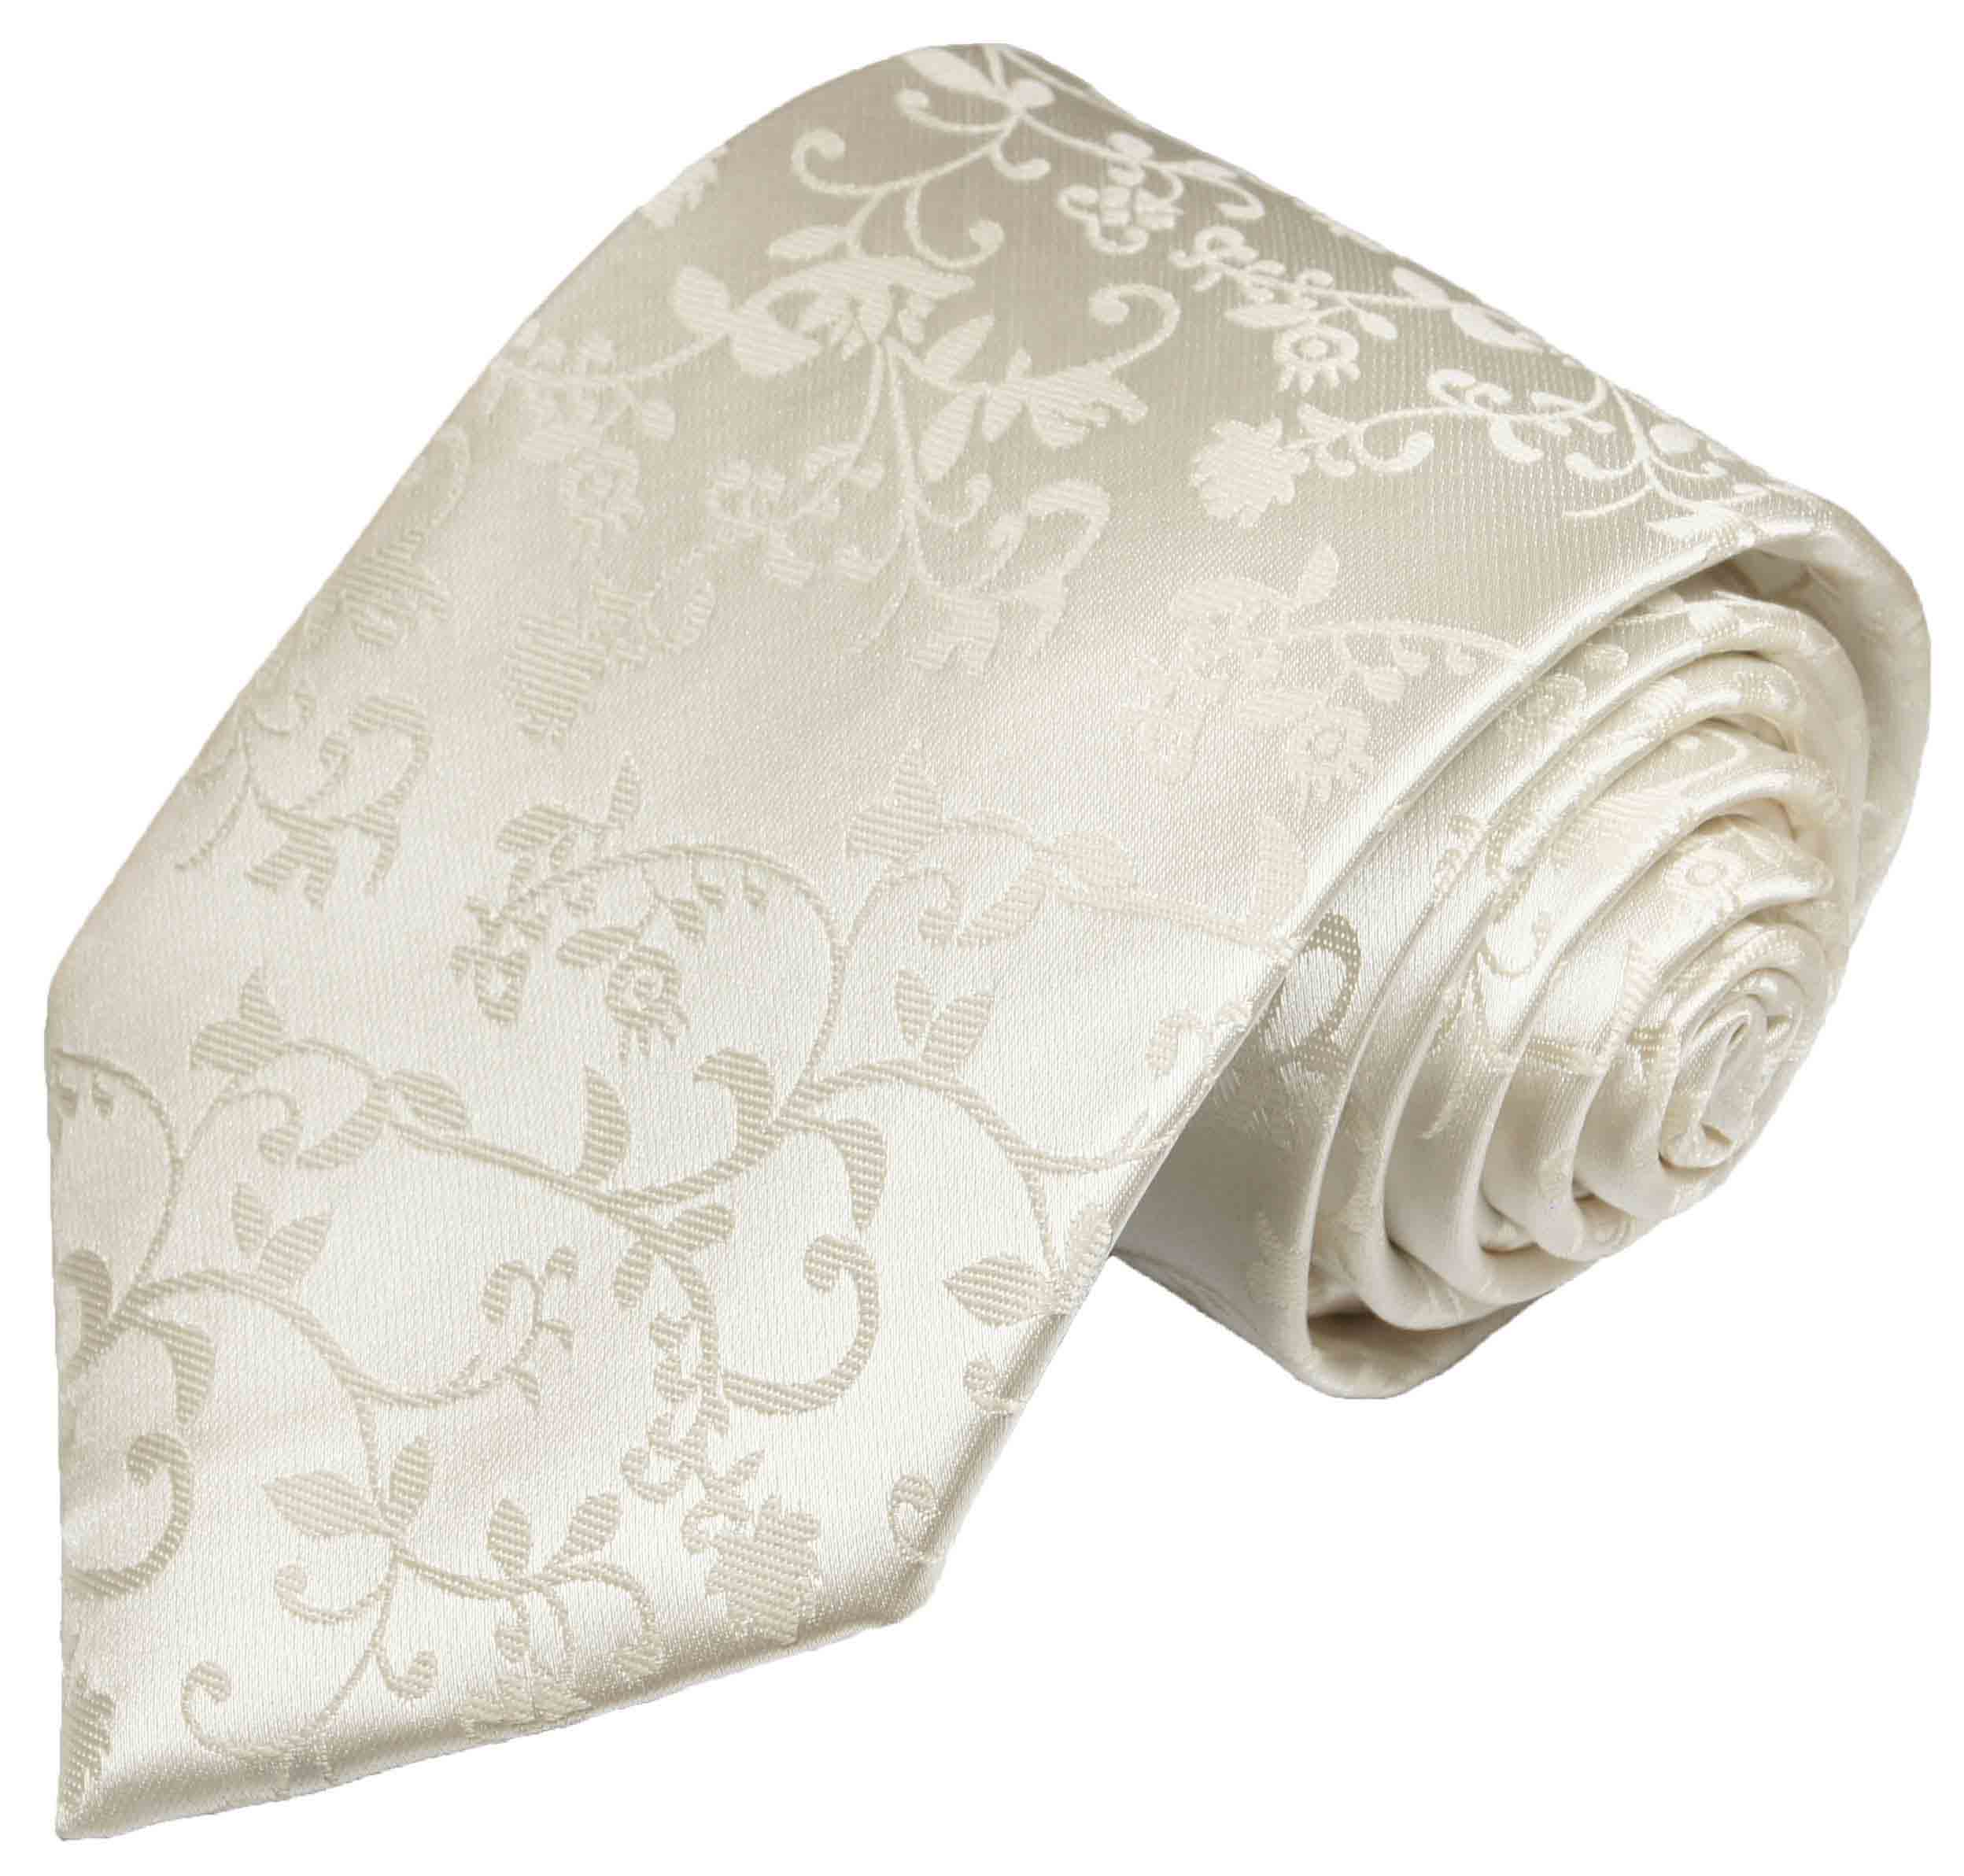 Paul Malone tie ivory floral necktie v41 - Paul Malone Shop